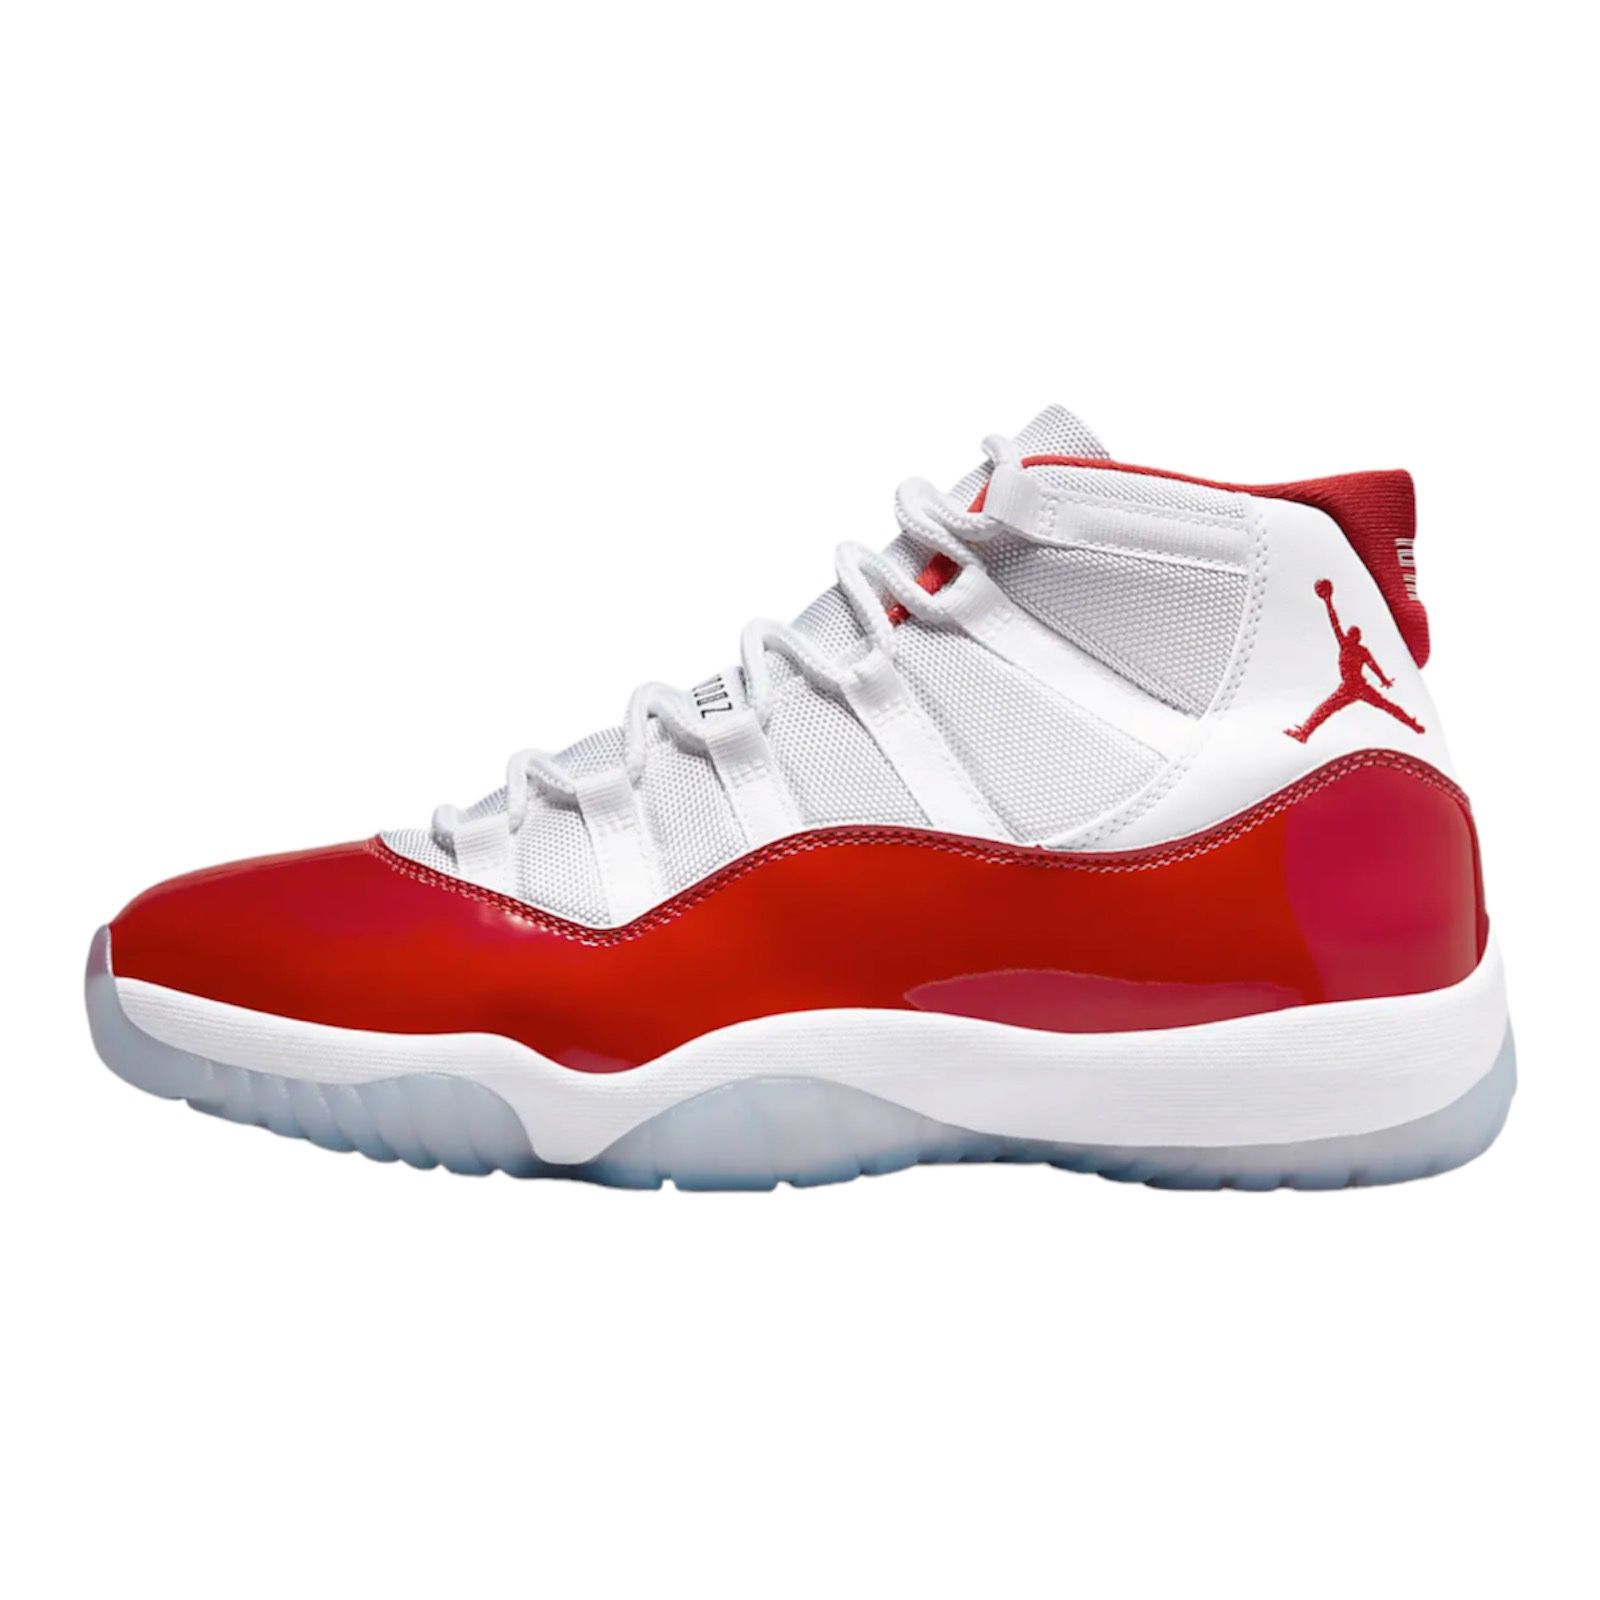 Nike Jordan 11 Retro Cherry CT8012 116 Men’s Size 10.5